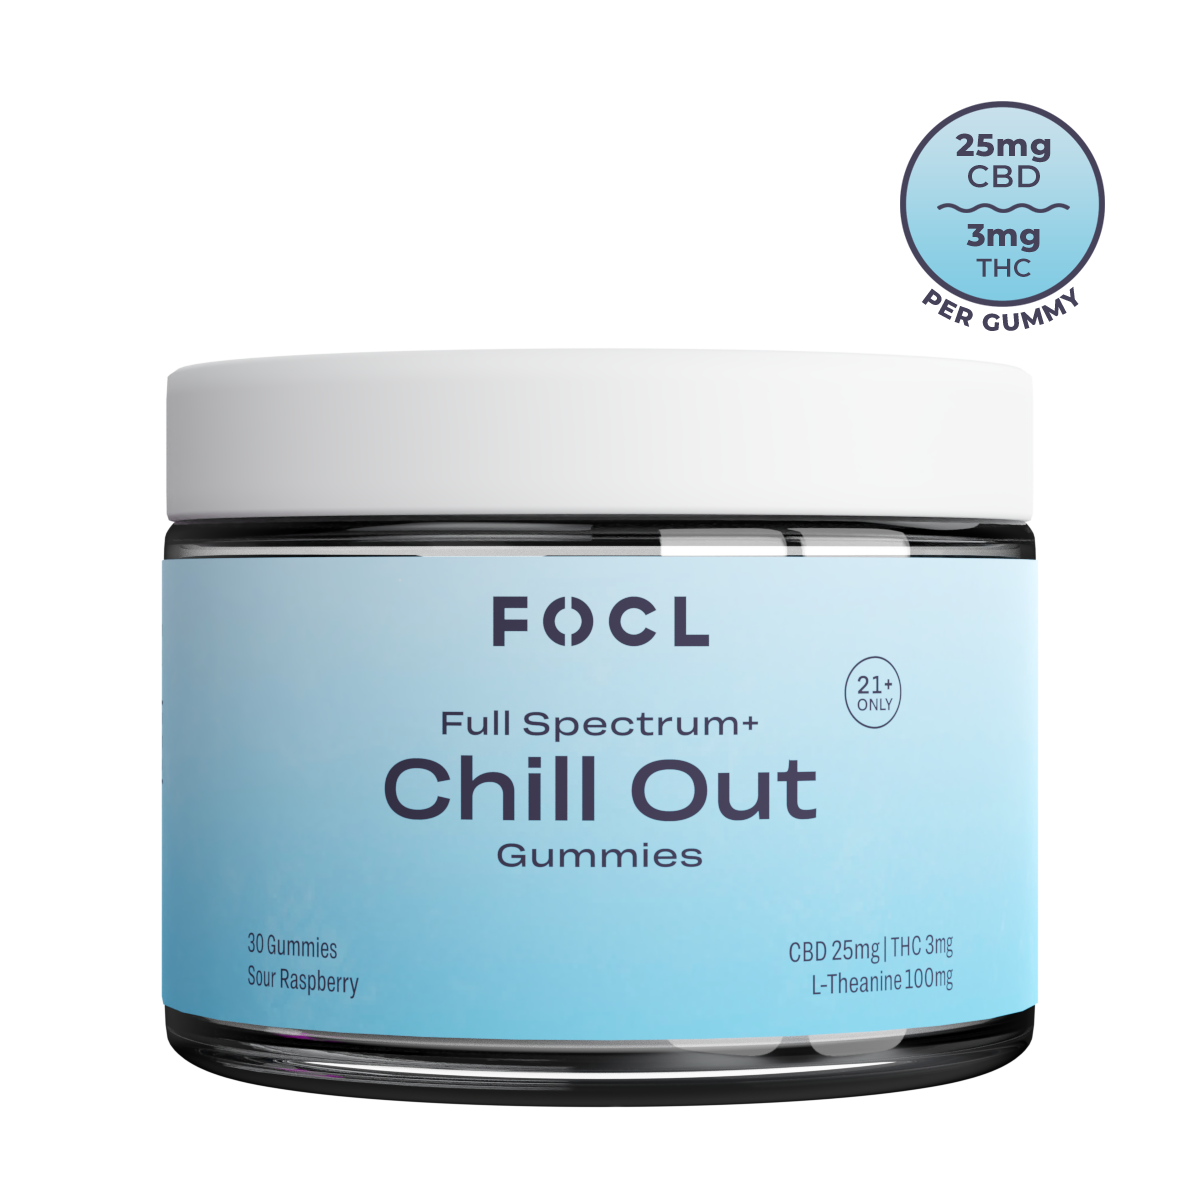 FOCL Chill out CBD + THC Gummies